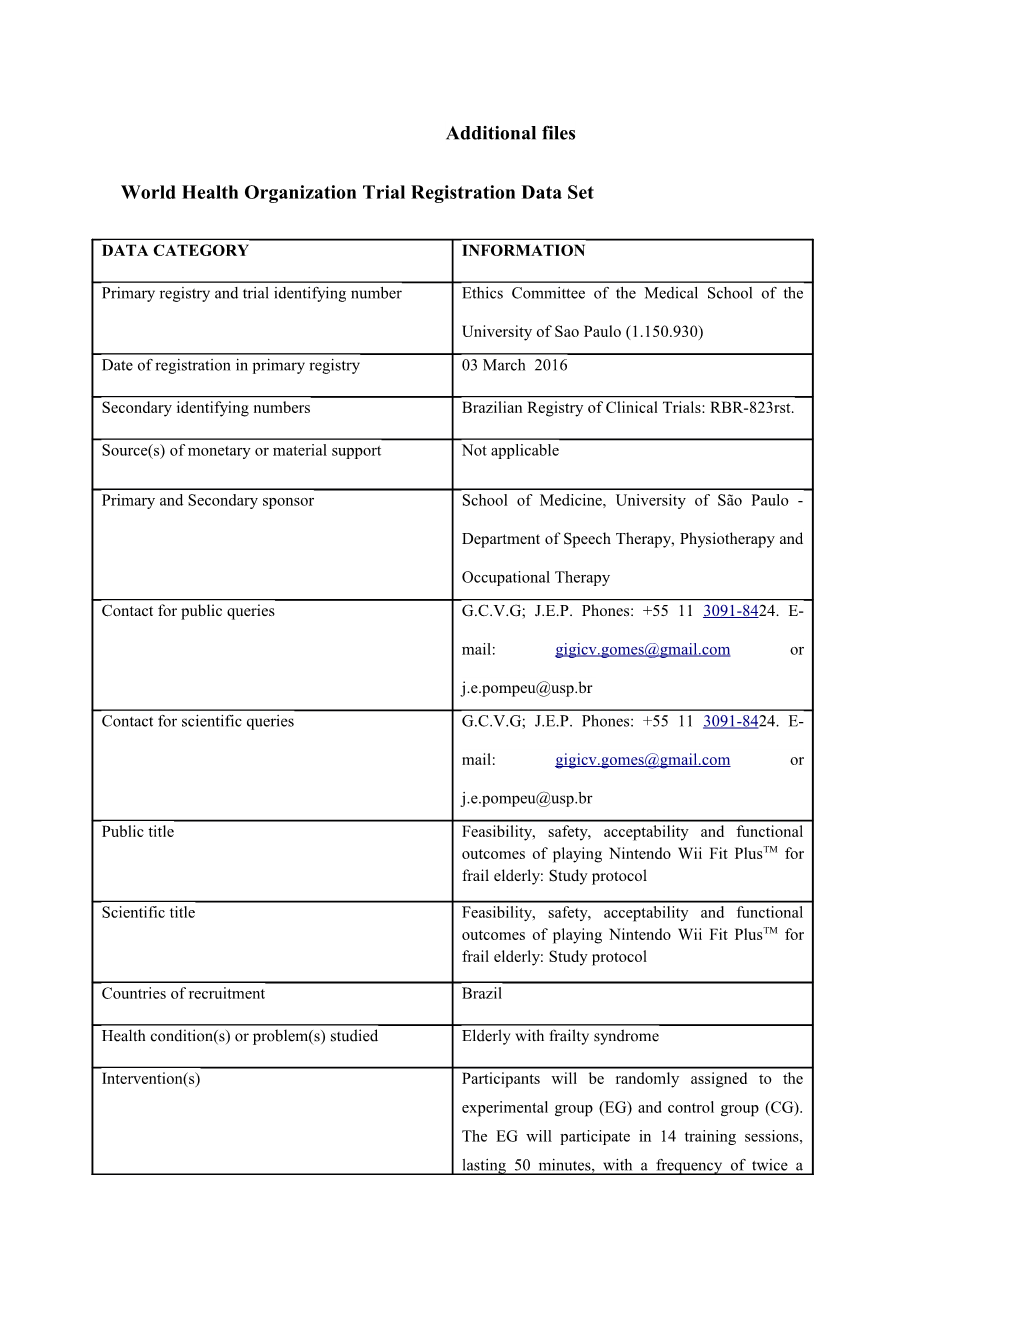 World Health Organization Trial Registration Data Set